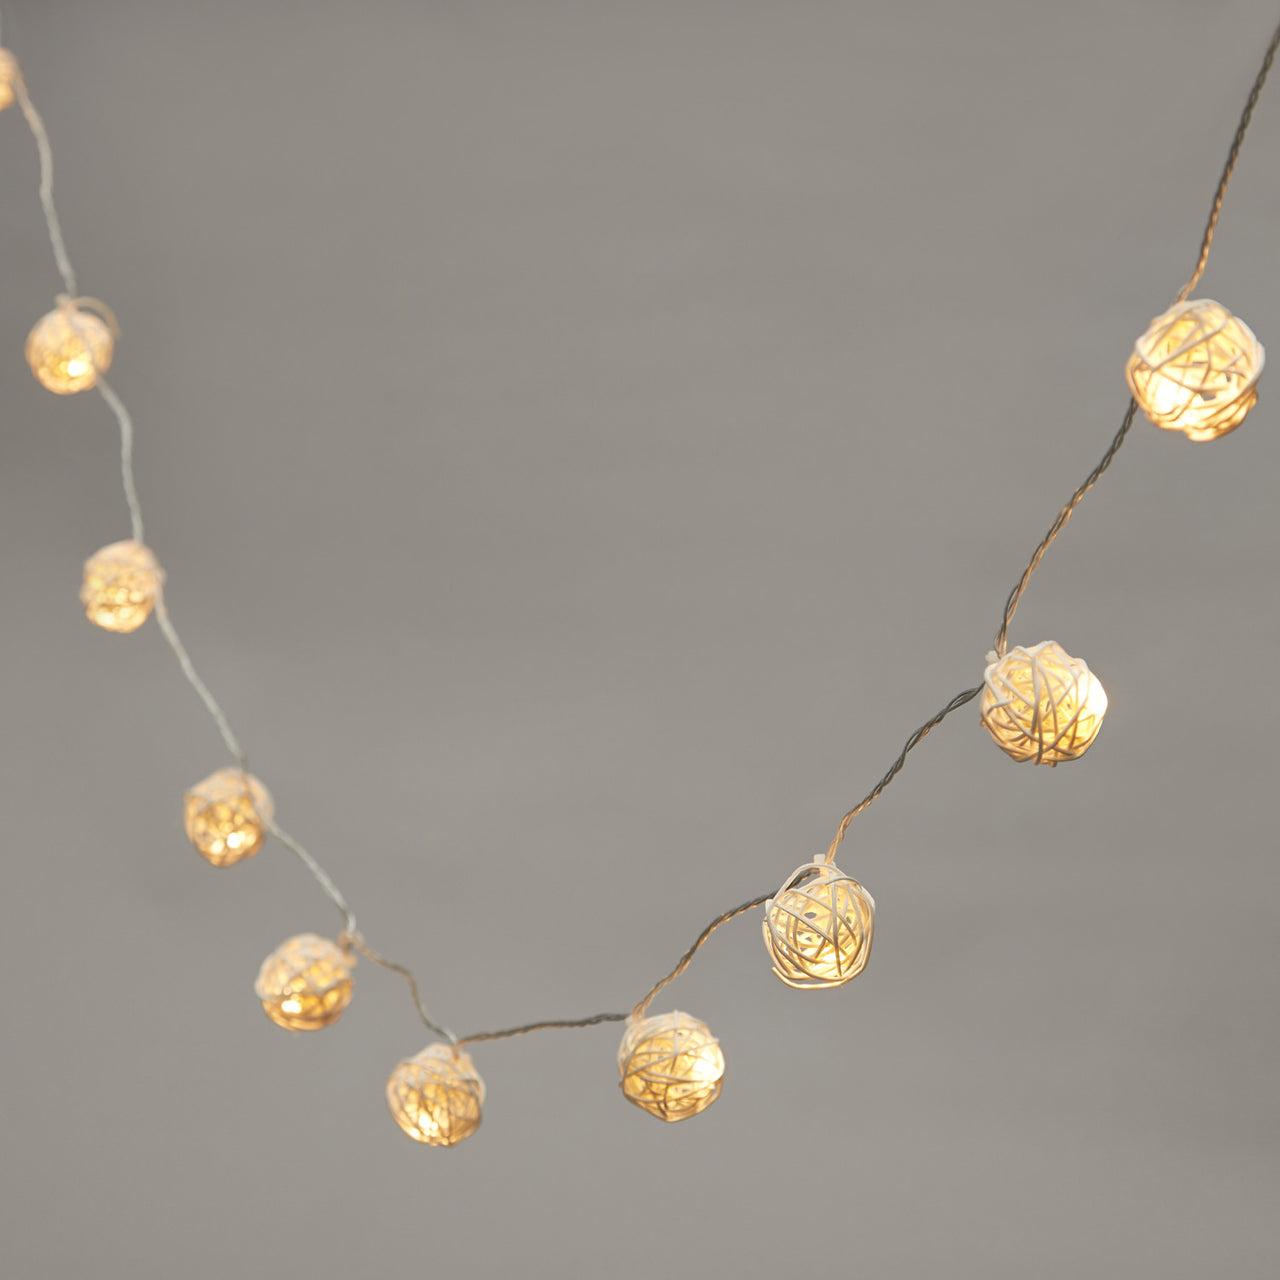 Guirlande Lumineuse LED à Piles avec 16 Boules en Rotin Tressé